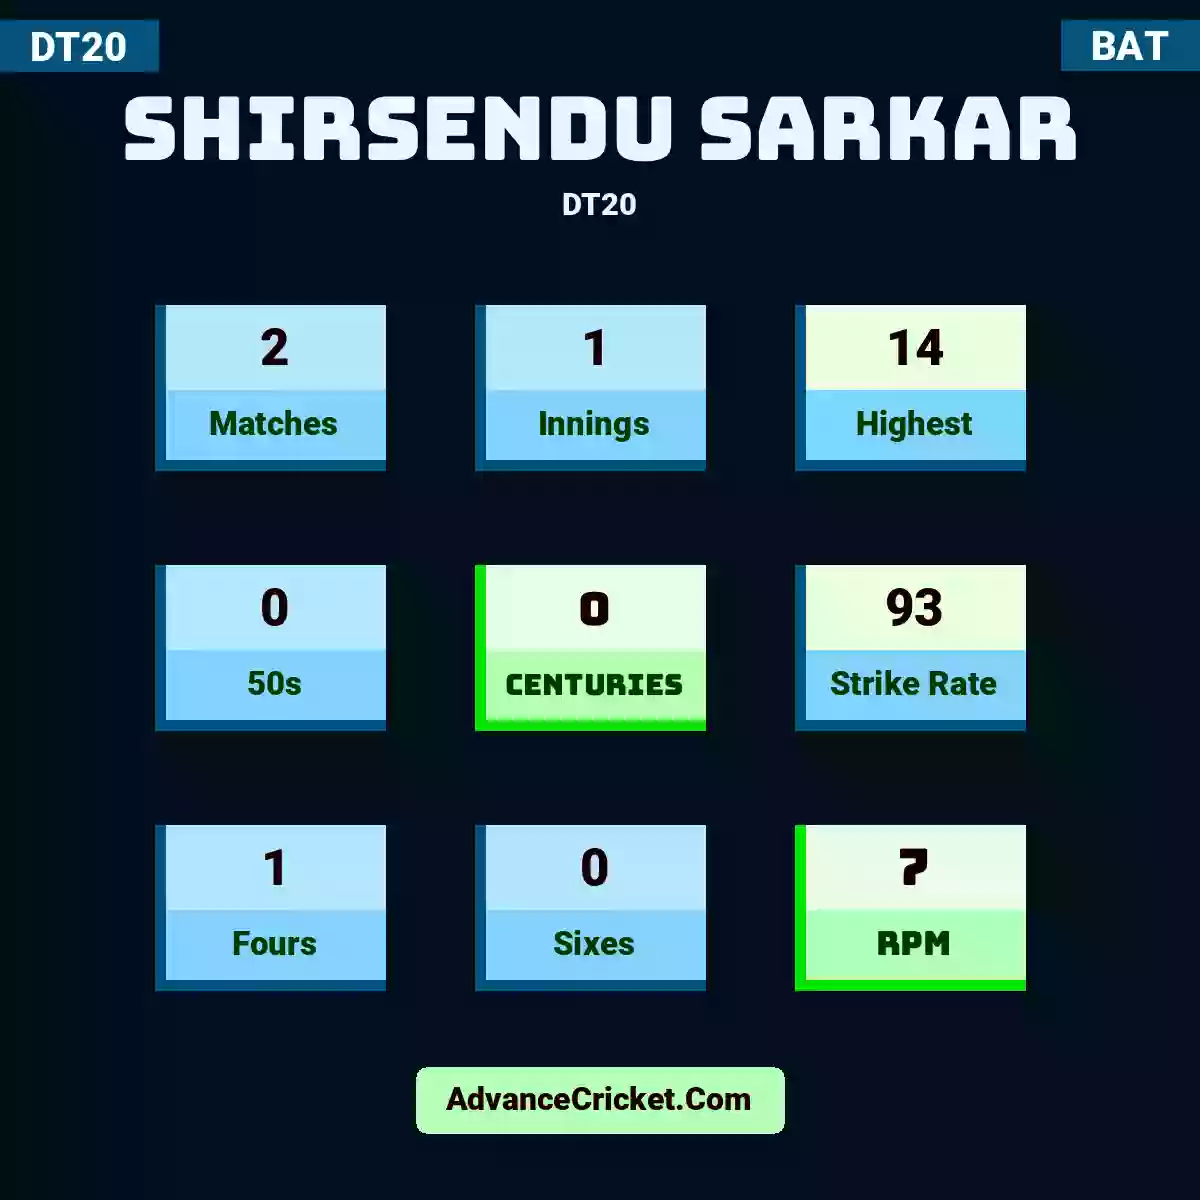 Shirsendu Sarkar DT20 , Shirsendu Sarkar played 2 matches, scored 14 runs as highest, 0 half-centuries, and 0 centuries, with a strike rate of 93. S.Sarkar hit 1 fours and 0 sixes, with an RPM of 7.